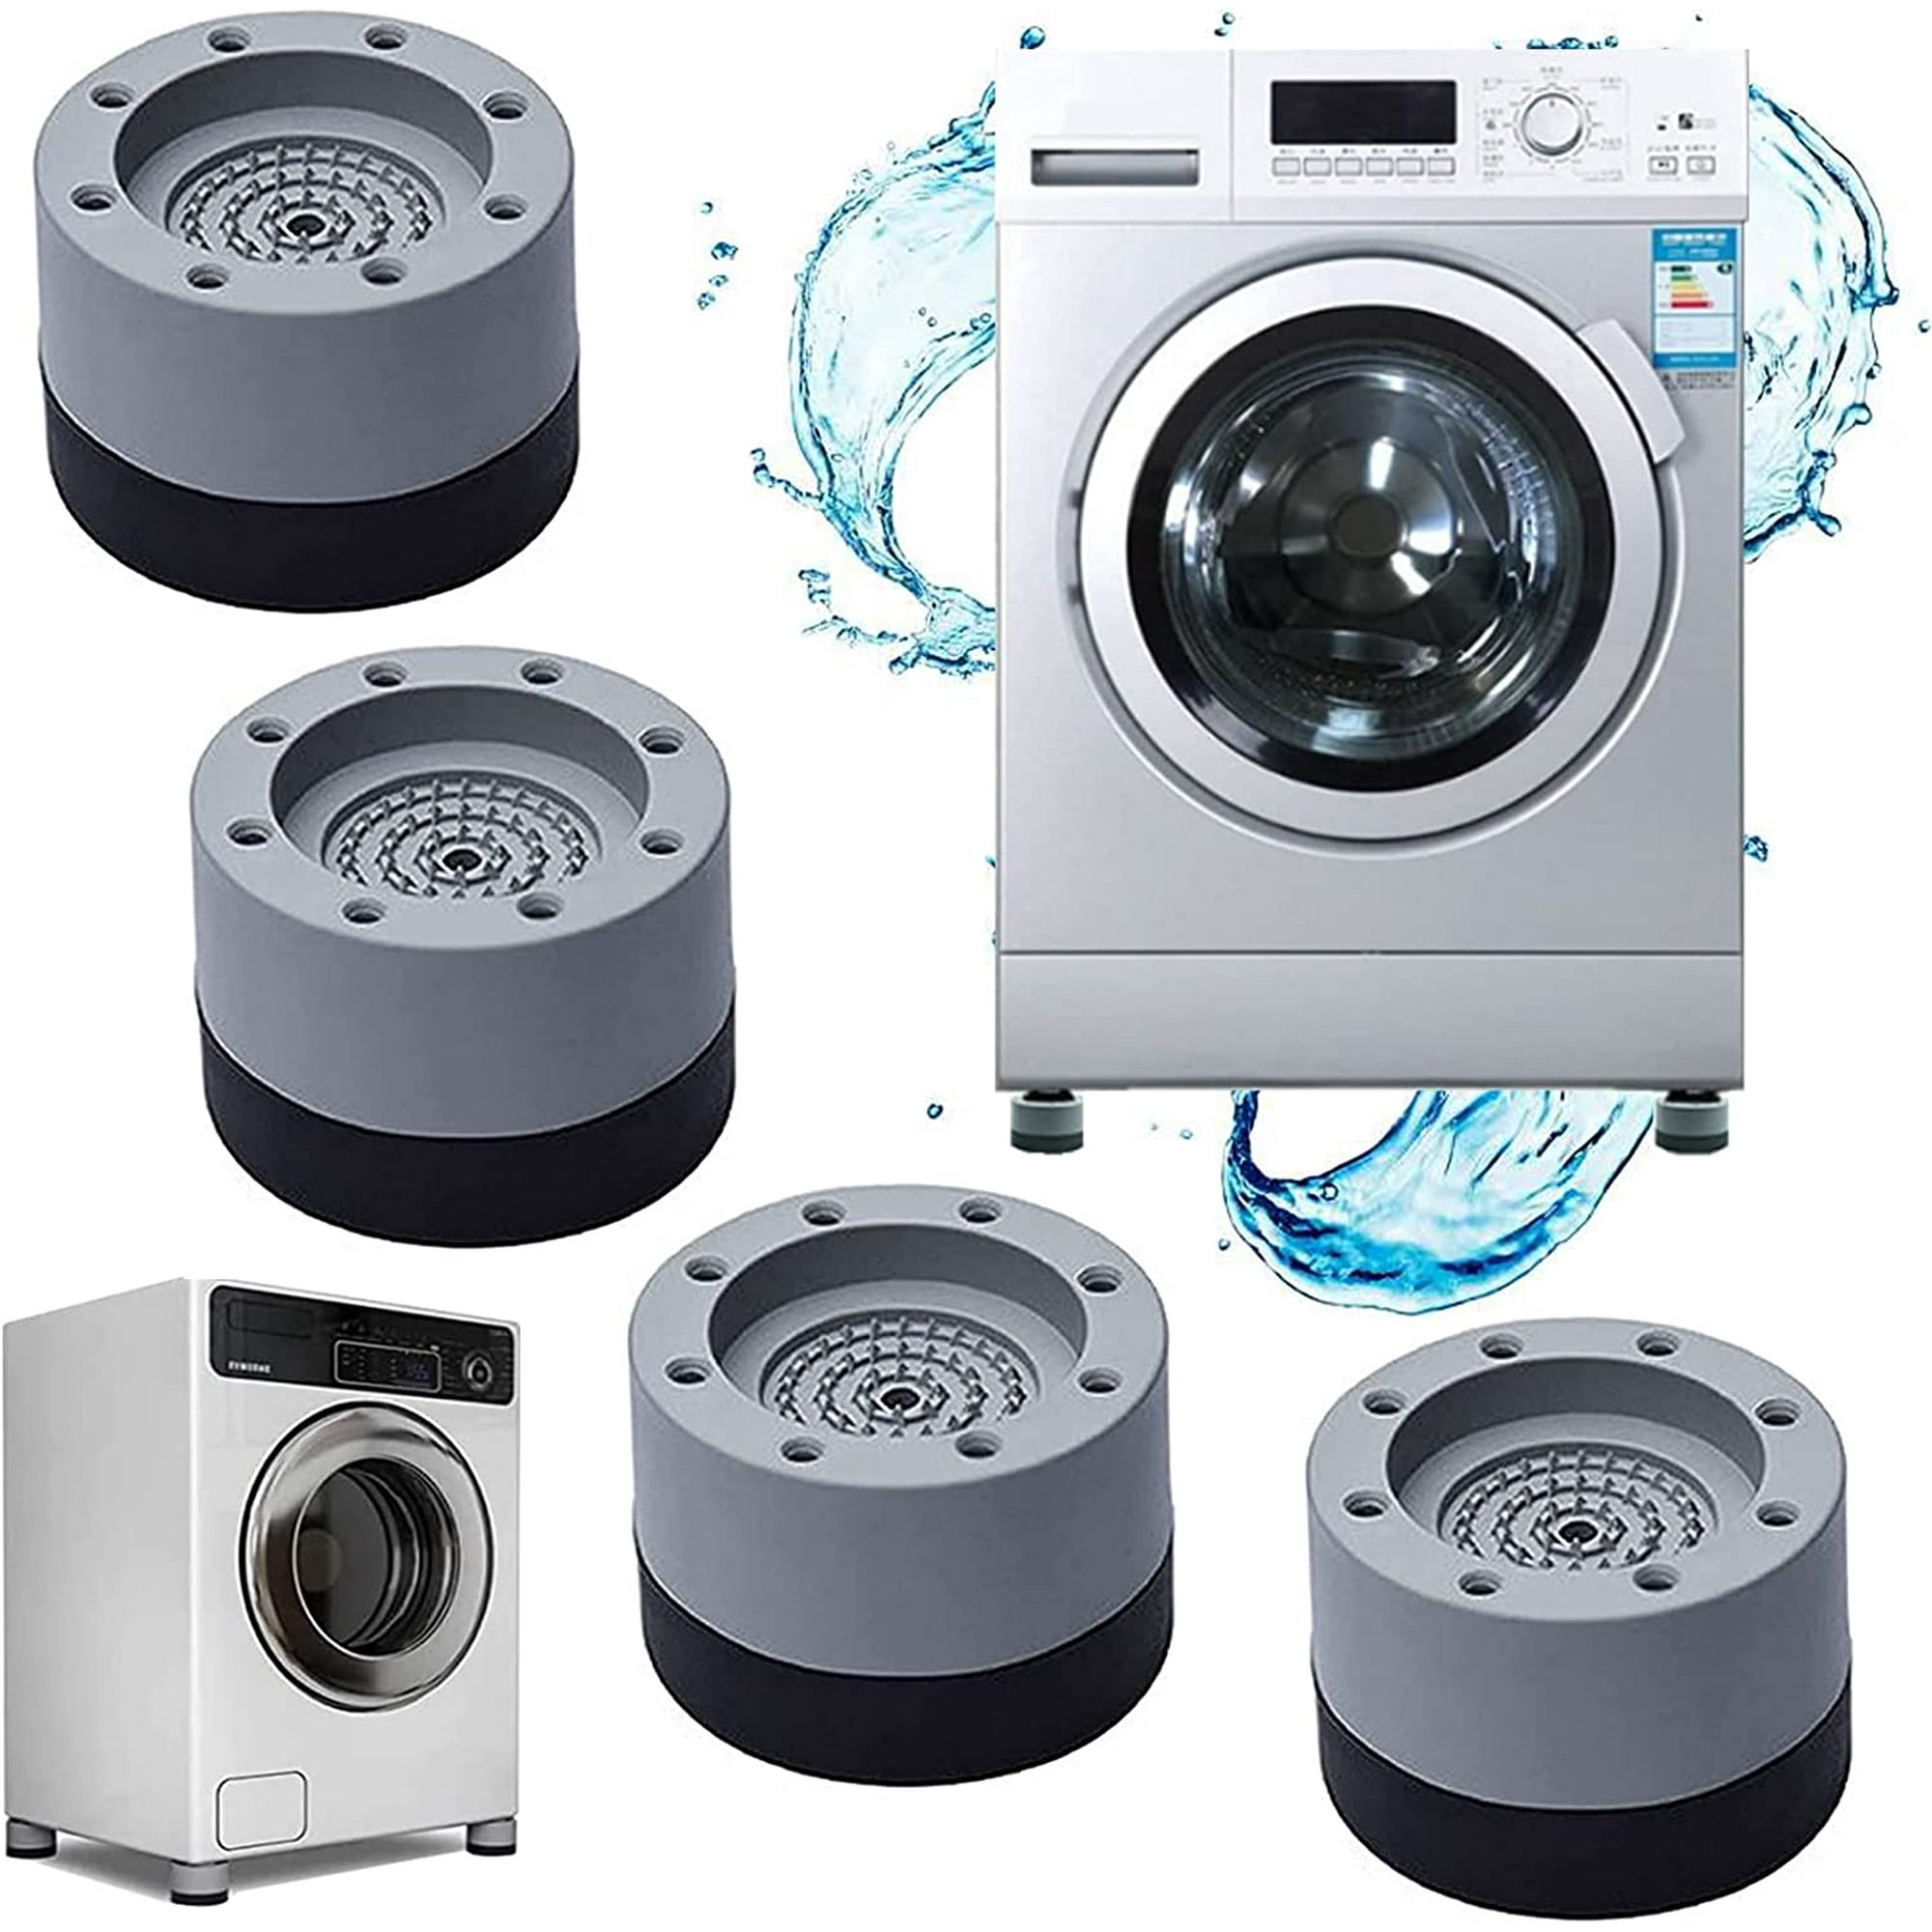 Patin anti vibration machine à laver offres & prix 